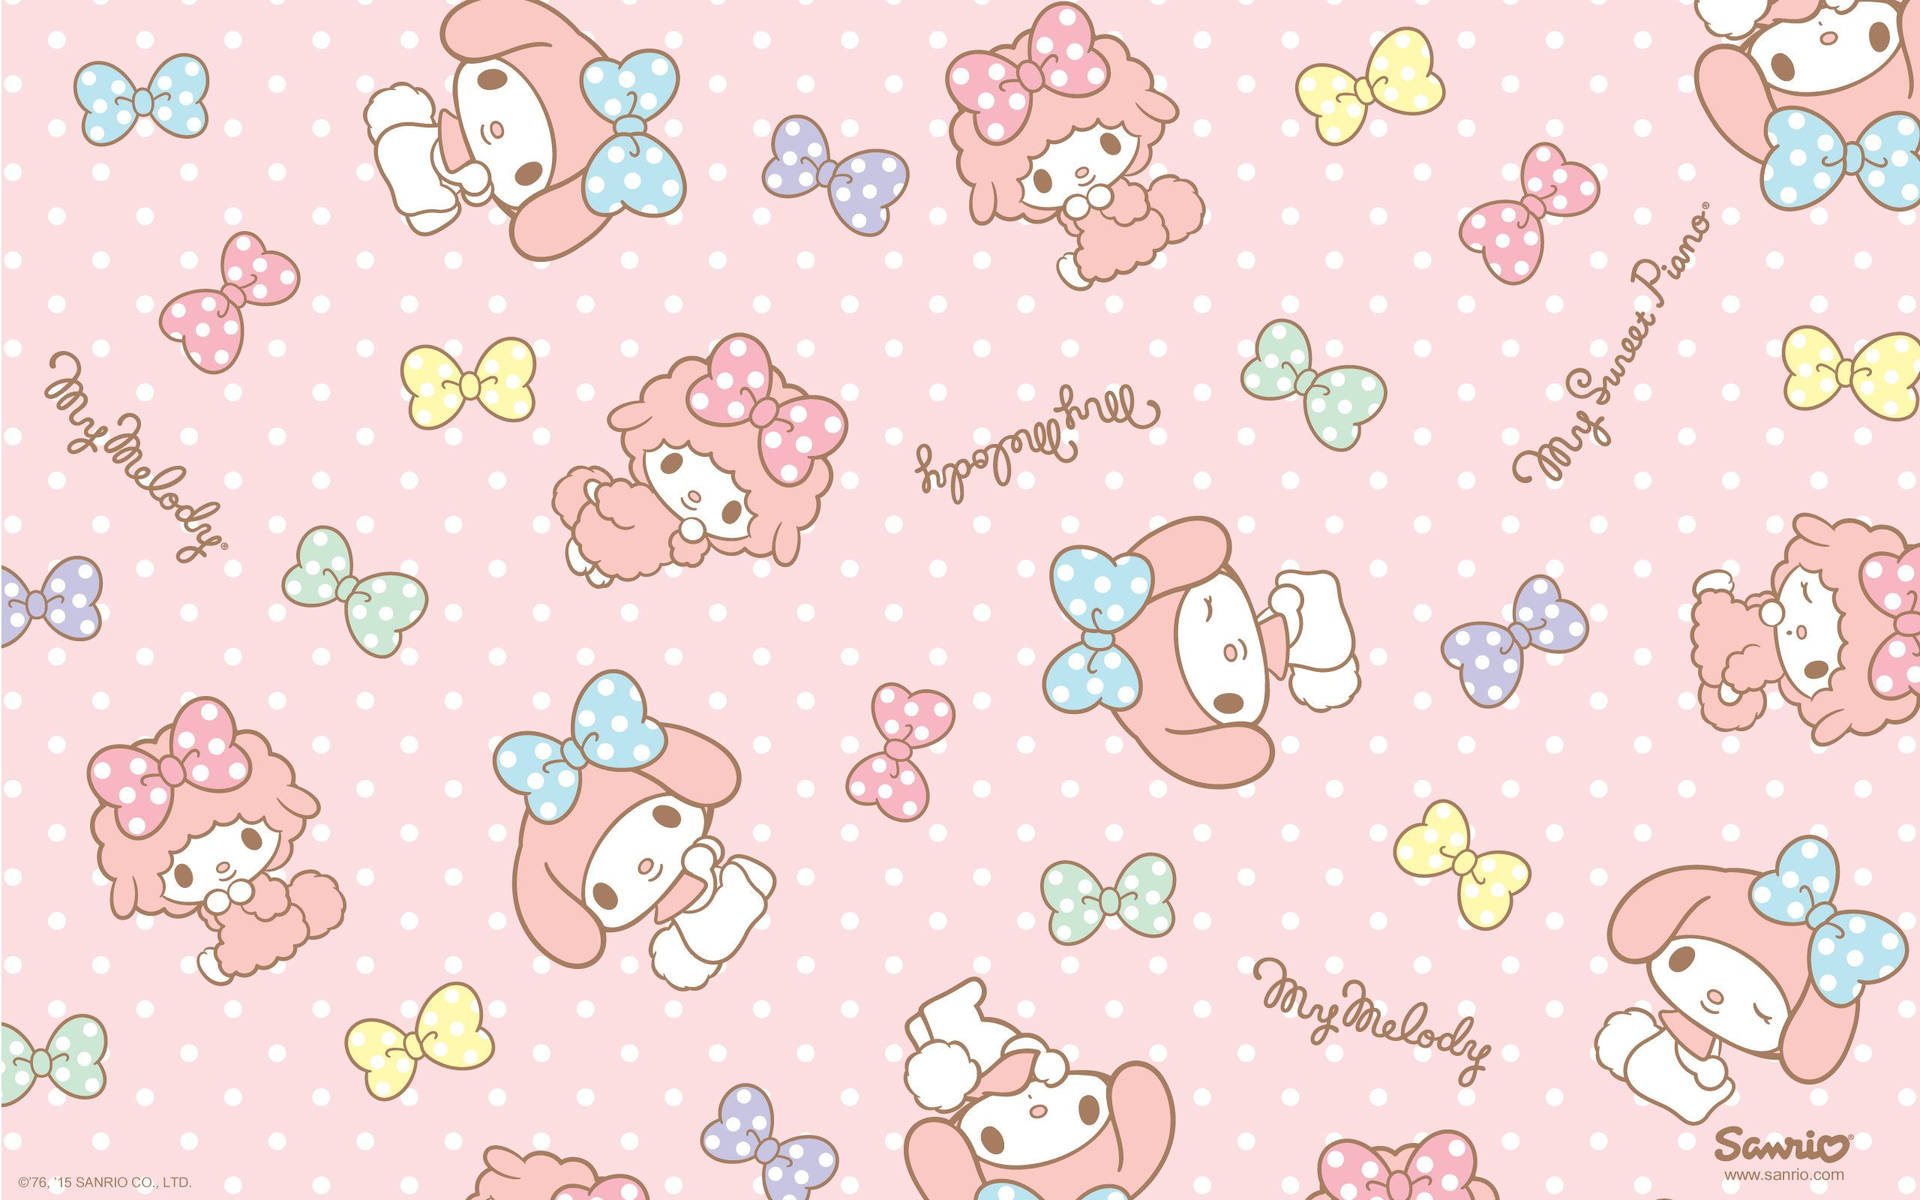 Free Cute Sanrio Wallpaper Downloads, Cute Sanrio Wallpaper for FREE